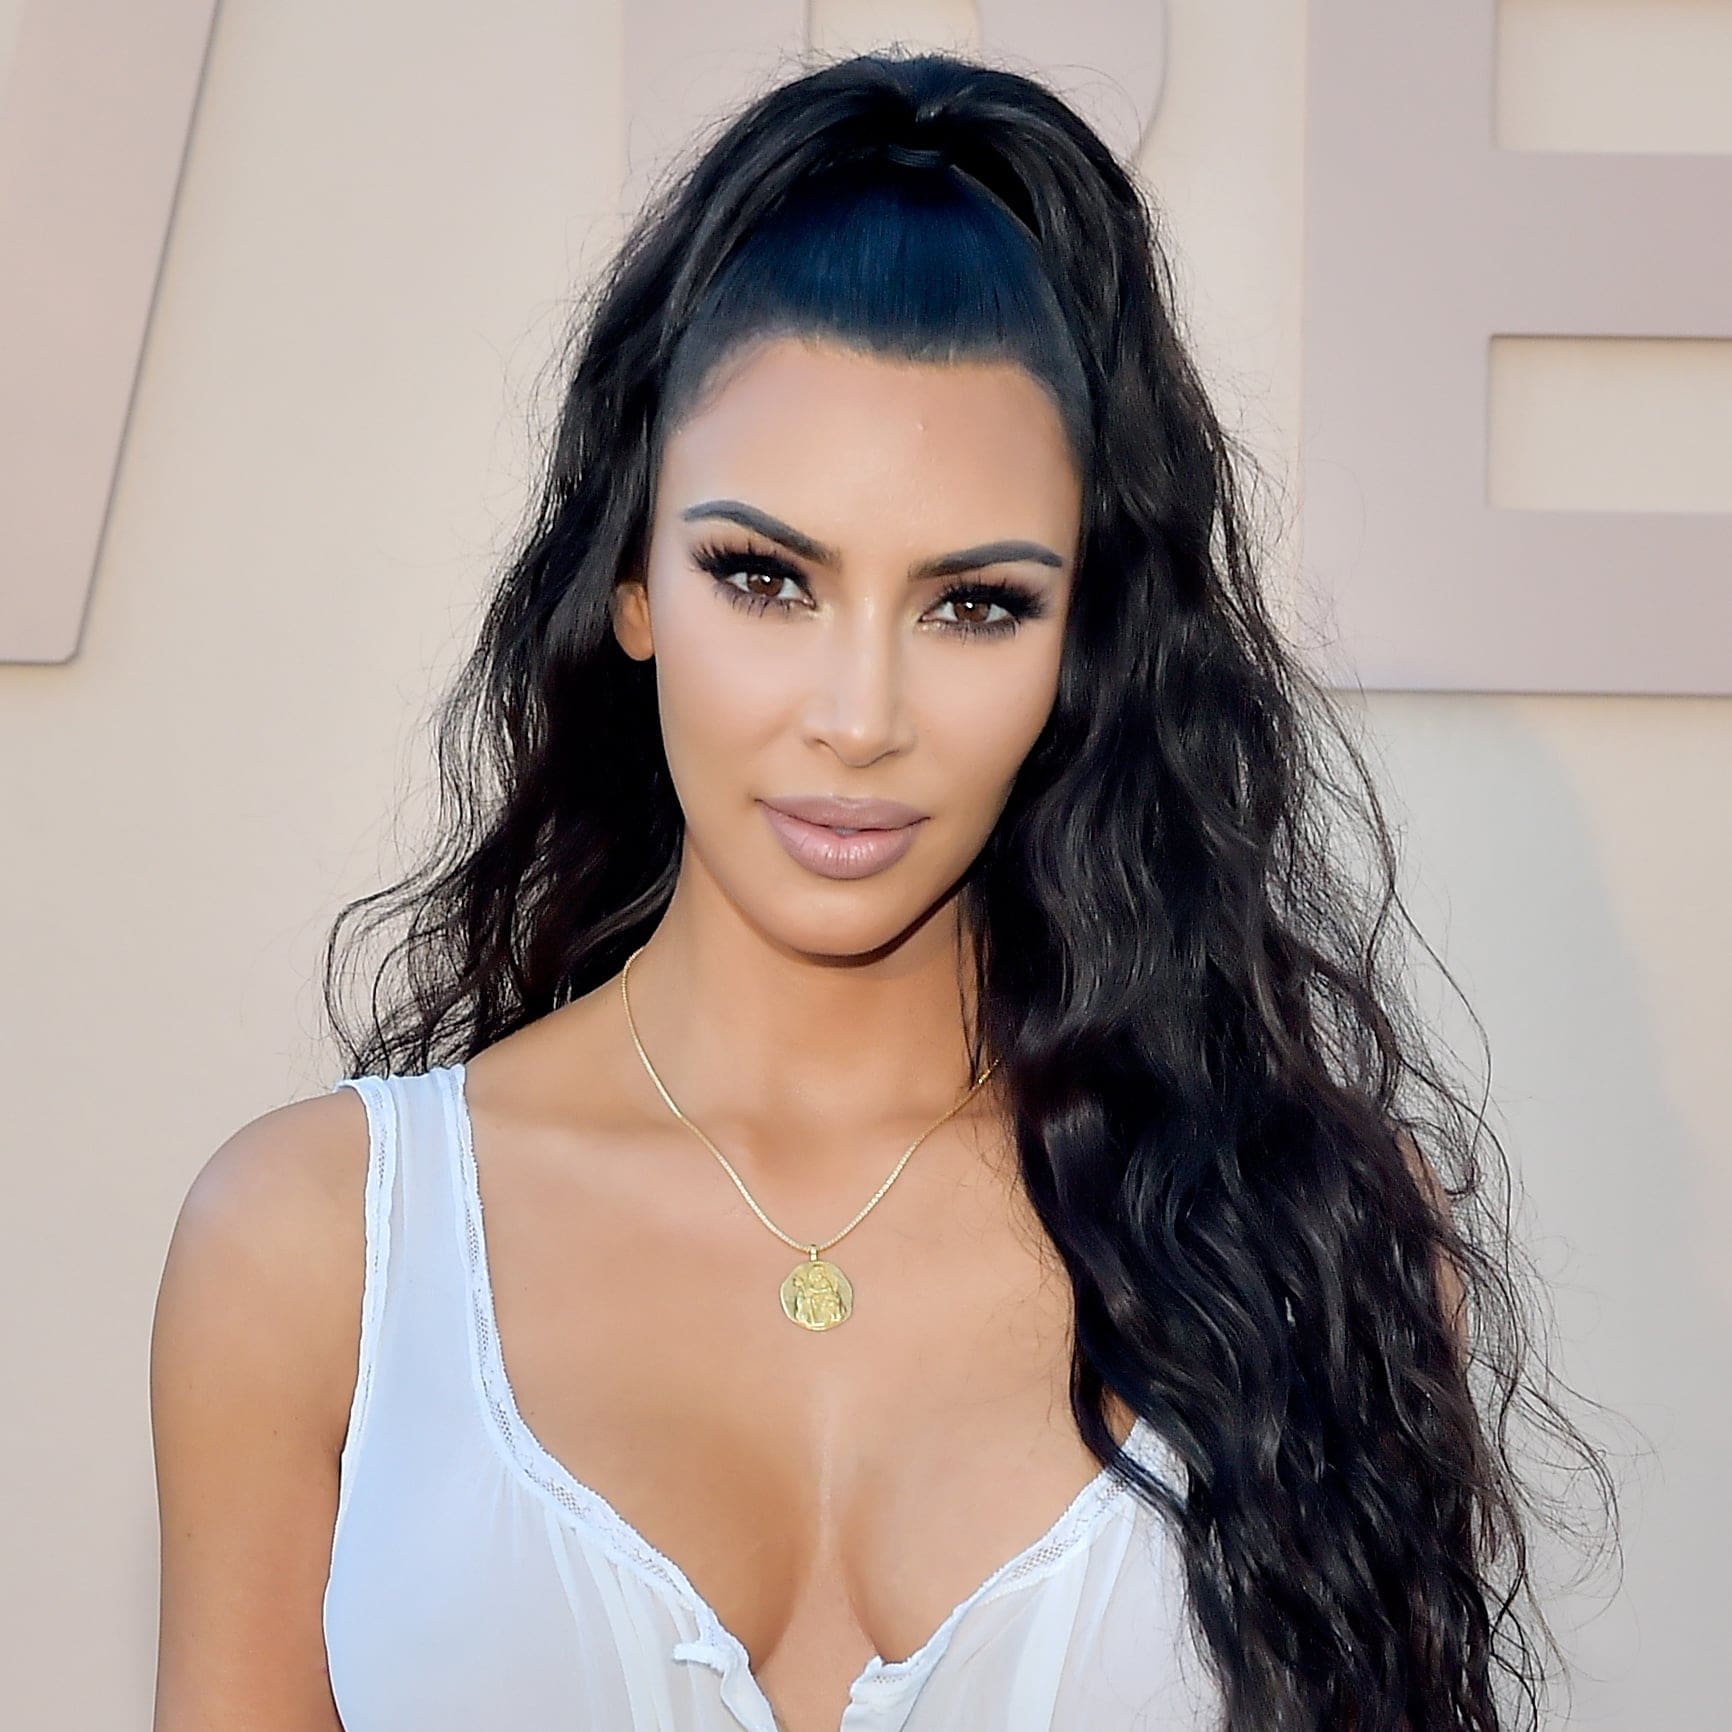 ”kim-kardashian-drops-important-update-on-julius-jones-case”